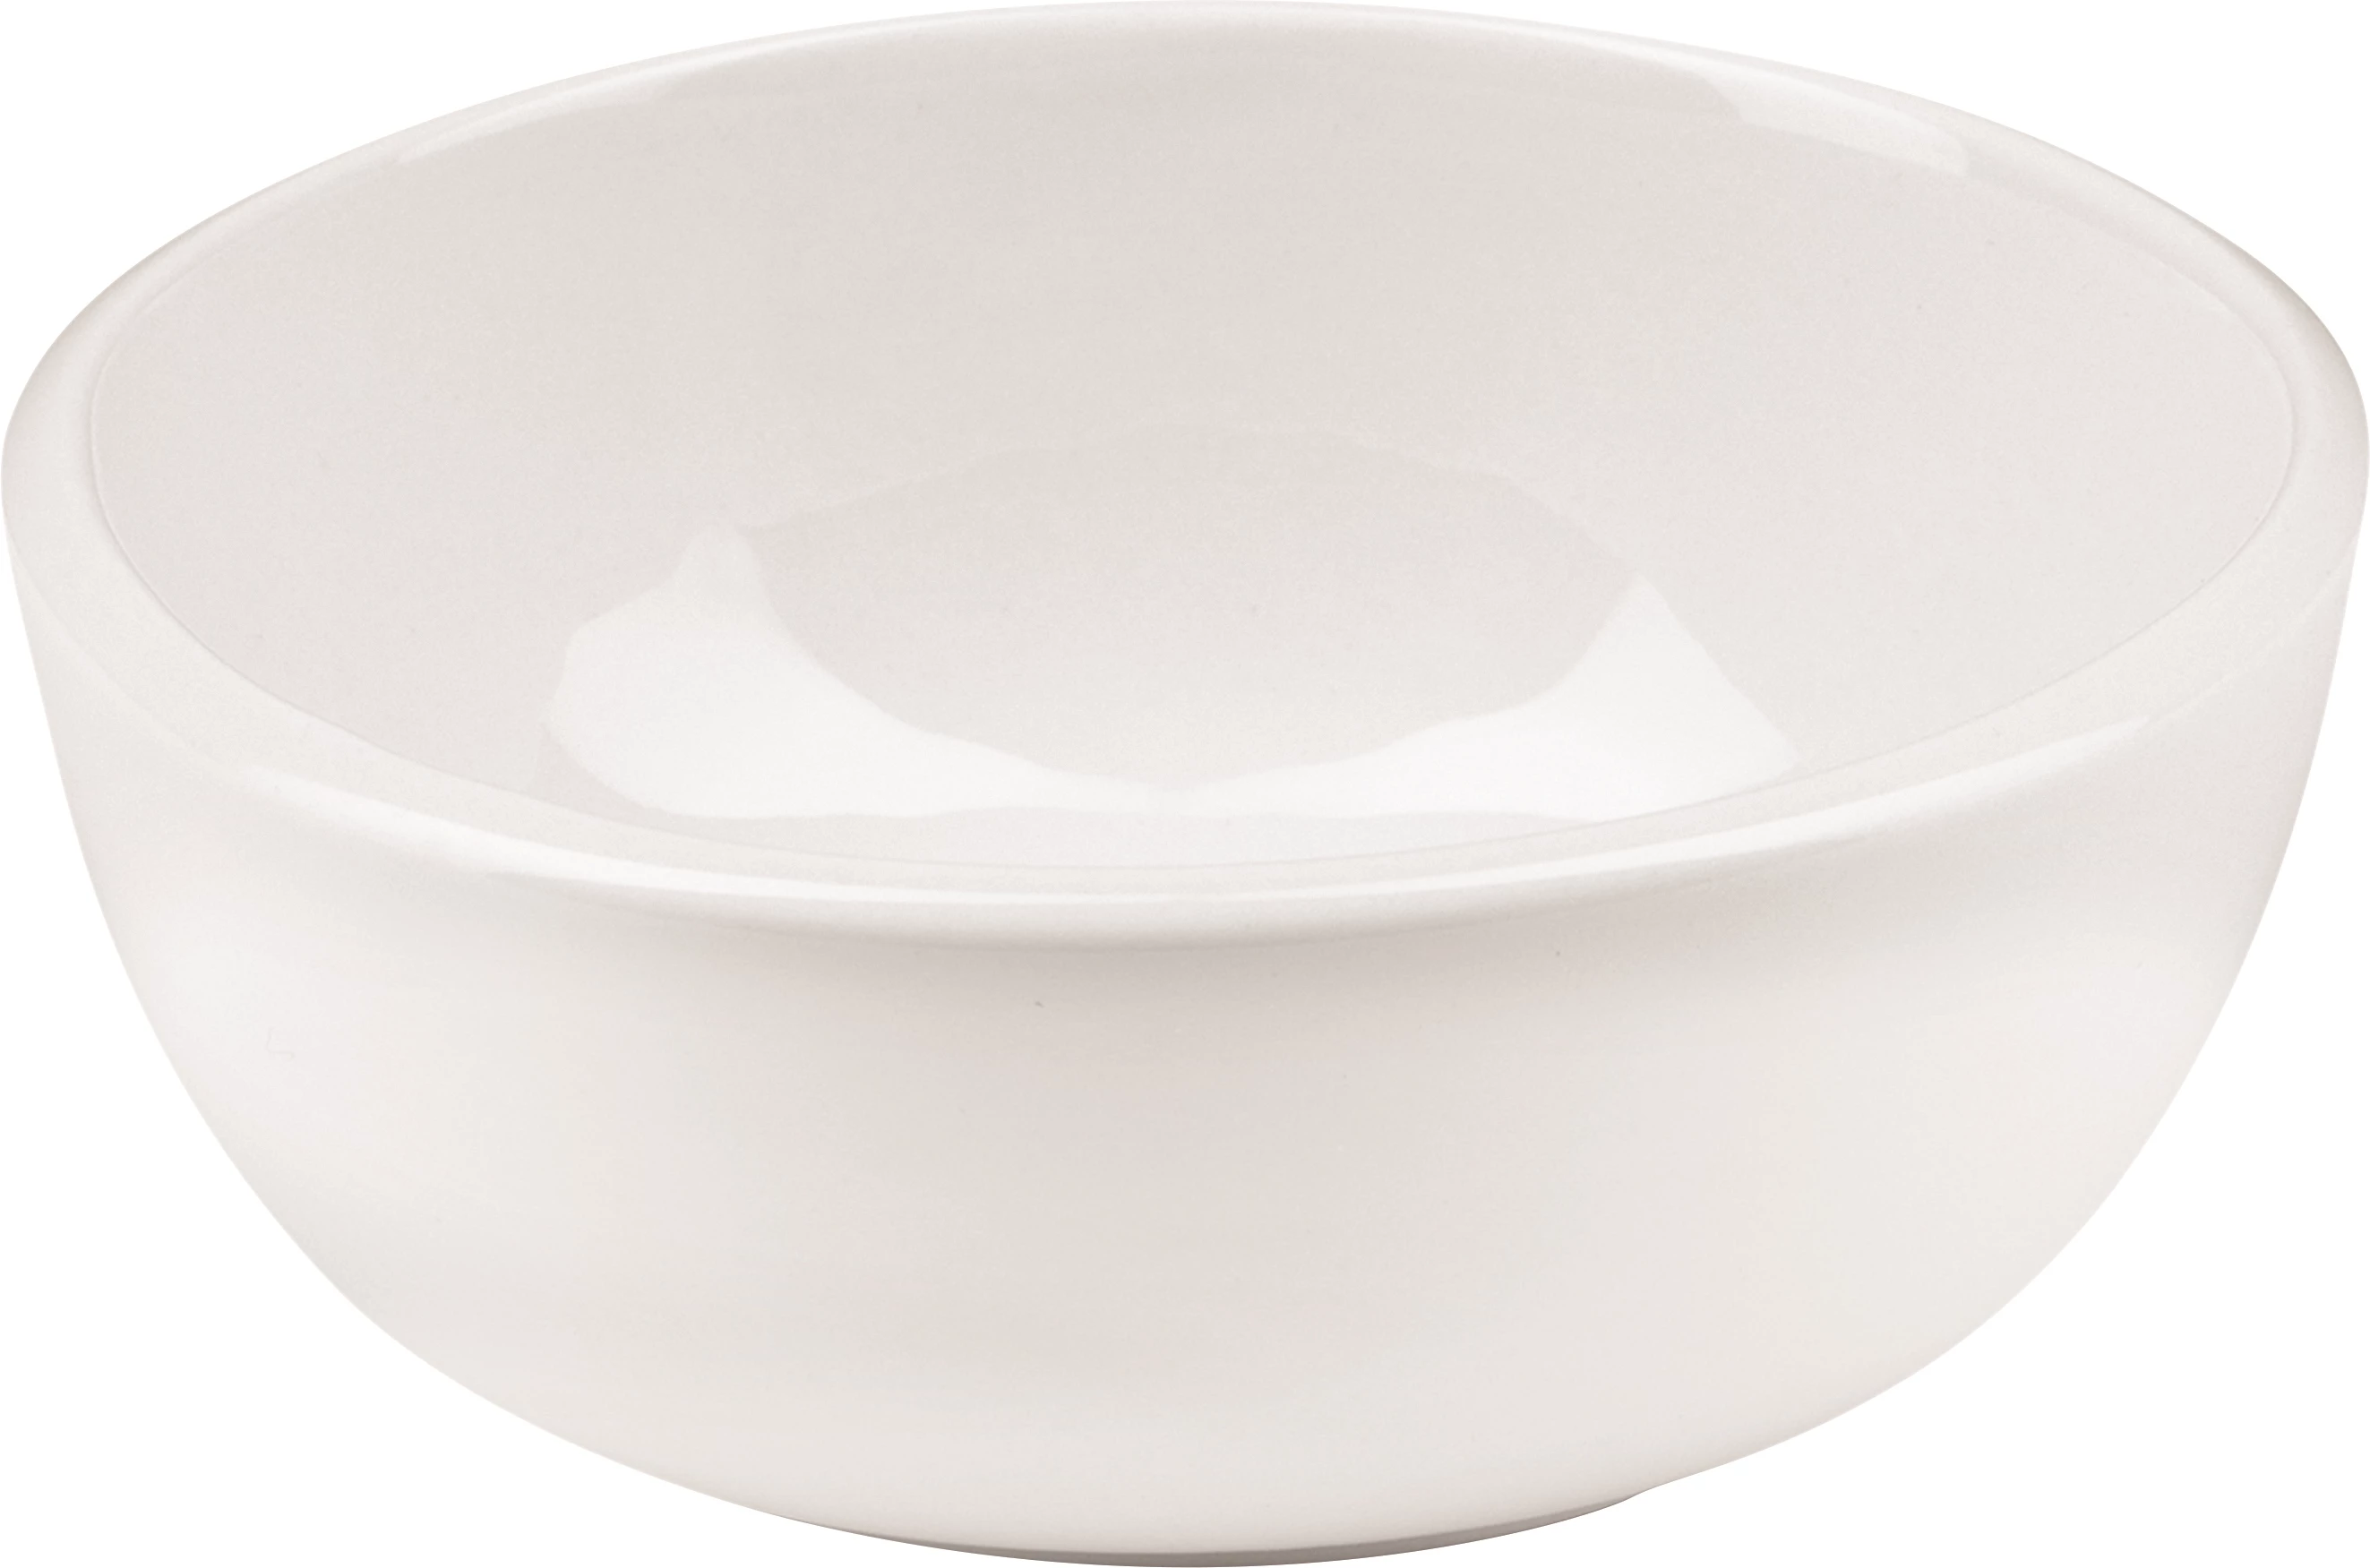 Figgjo Pax skål, hvid, 50 cl, ø14 cm